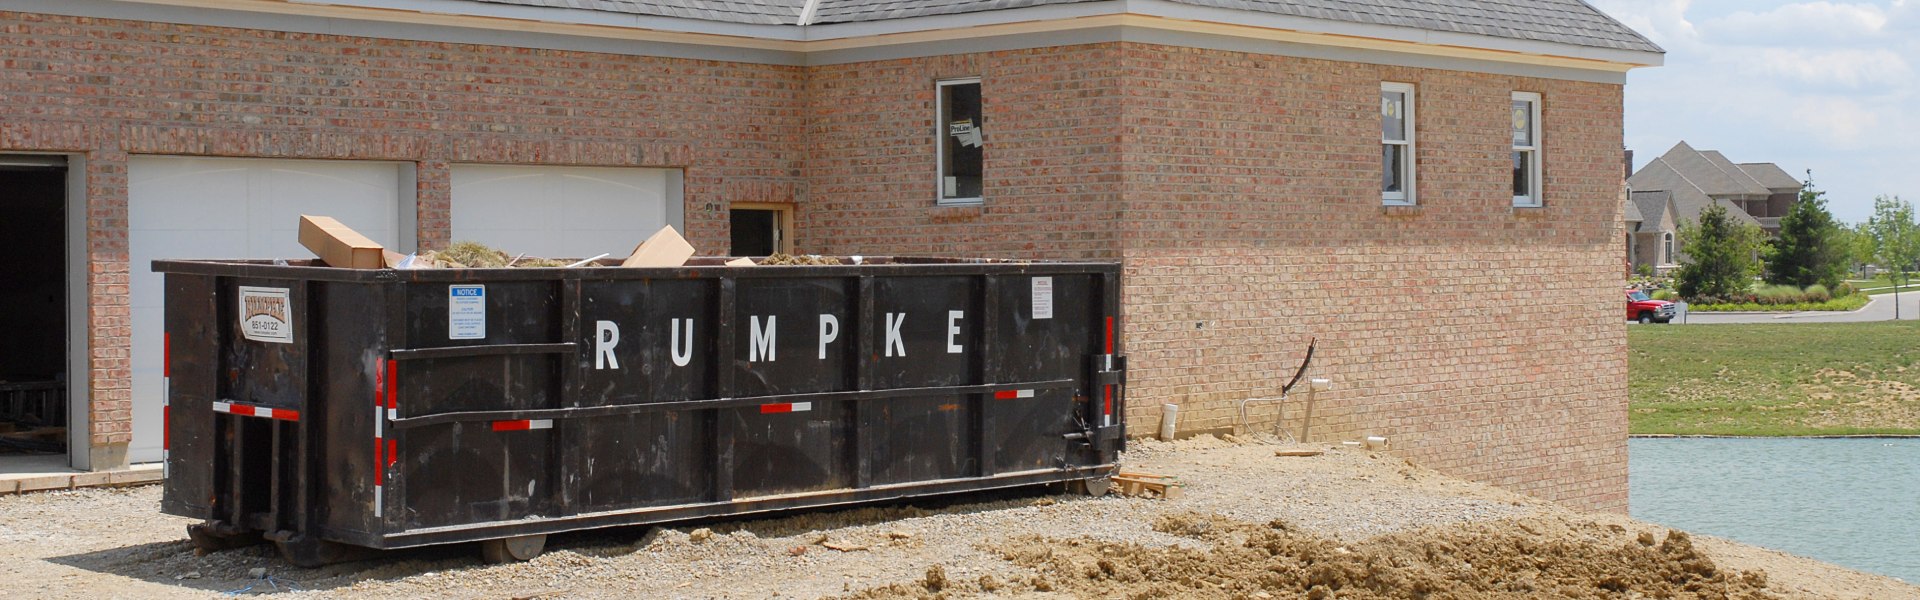 Rumpke Commercial Dumpster On Construction Site